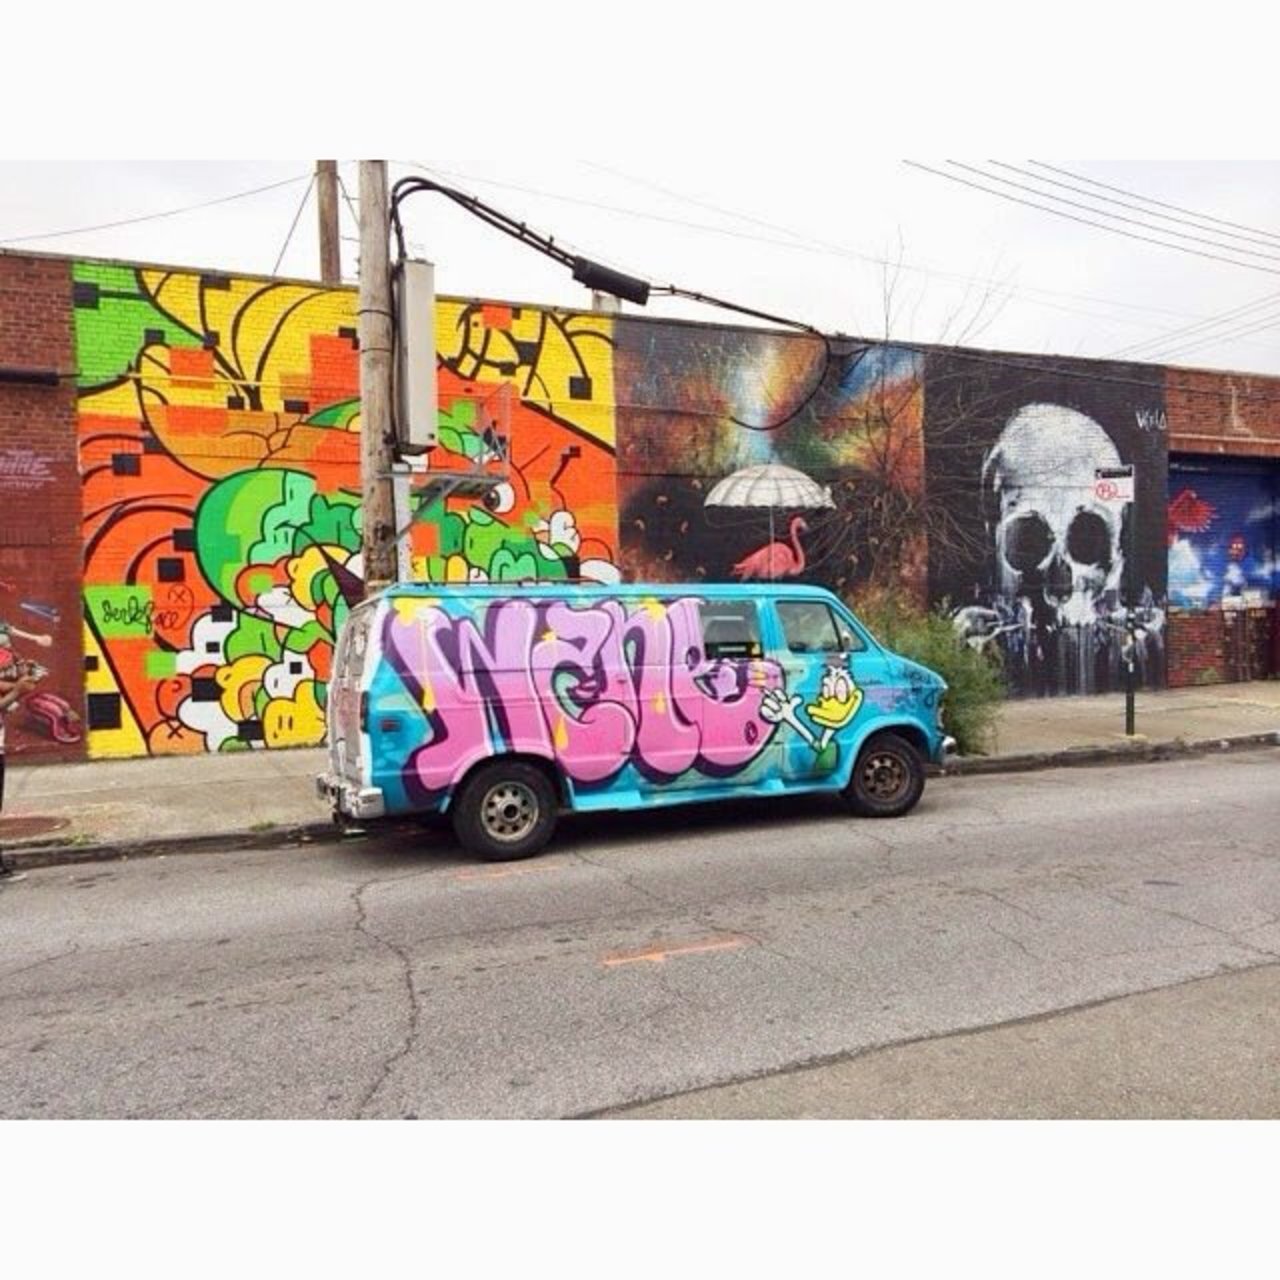 I saw this van in #brooklyn . Does anyone know of the #artist ? #streetart #graffiti https://t.co/ieis4u472y